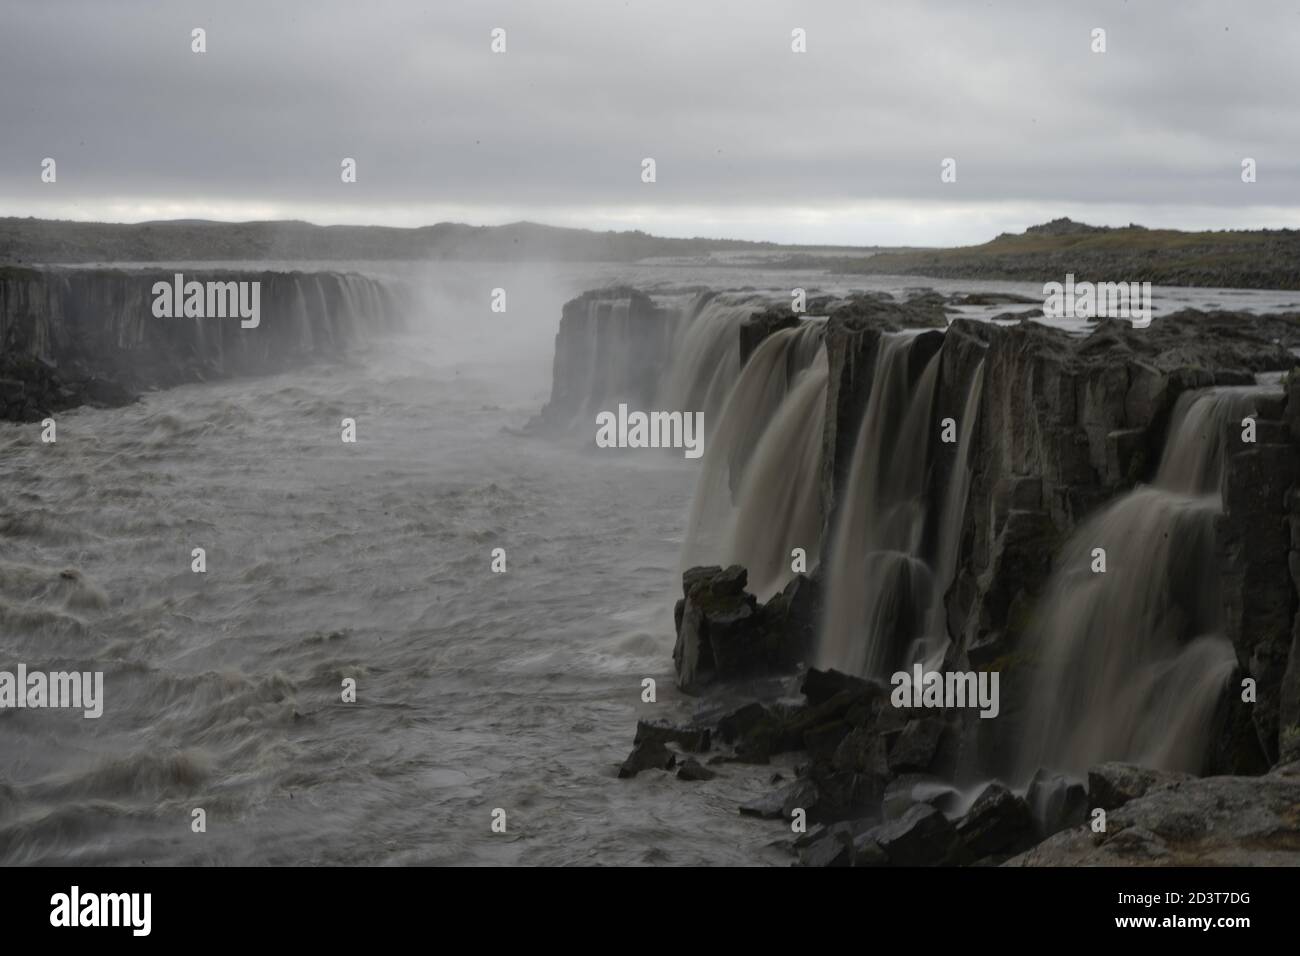 Island Wasserfall Milchwasserkaskade Stockfoto